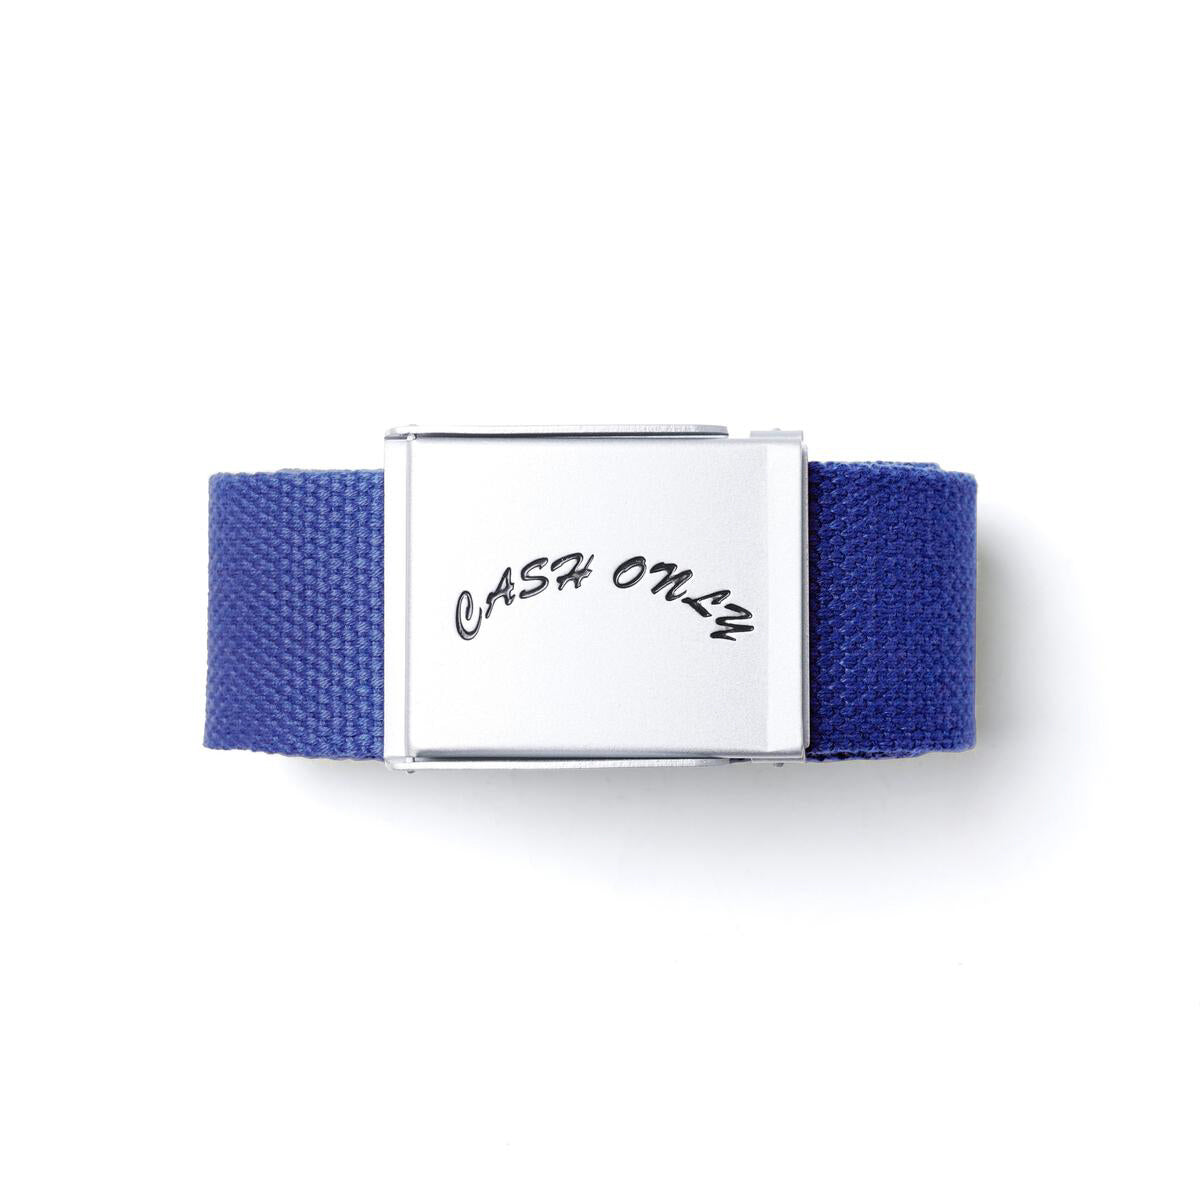 Logo Web Belt, Blue